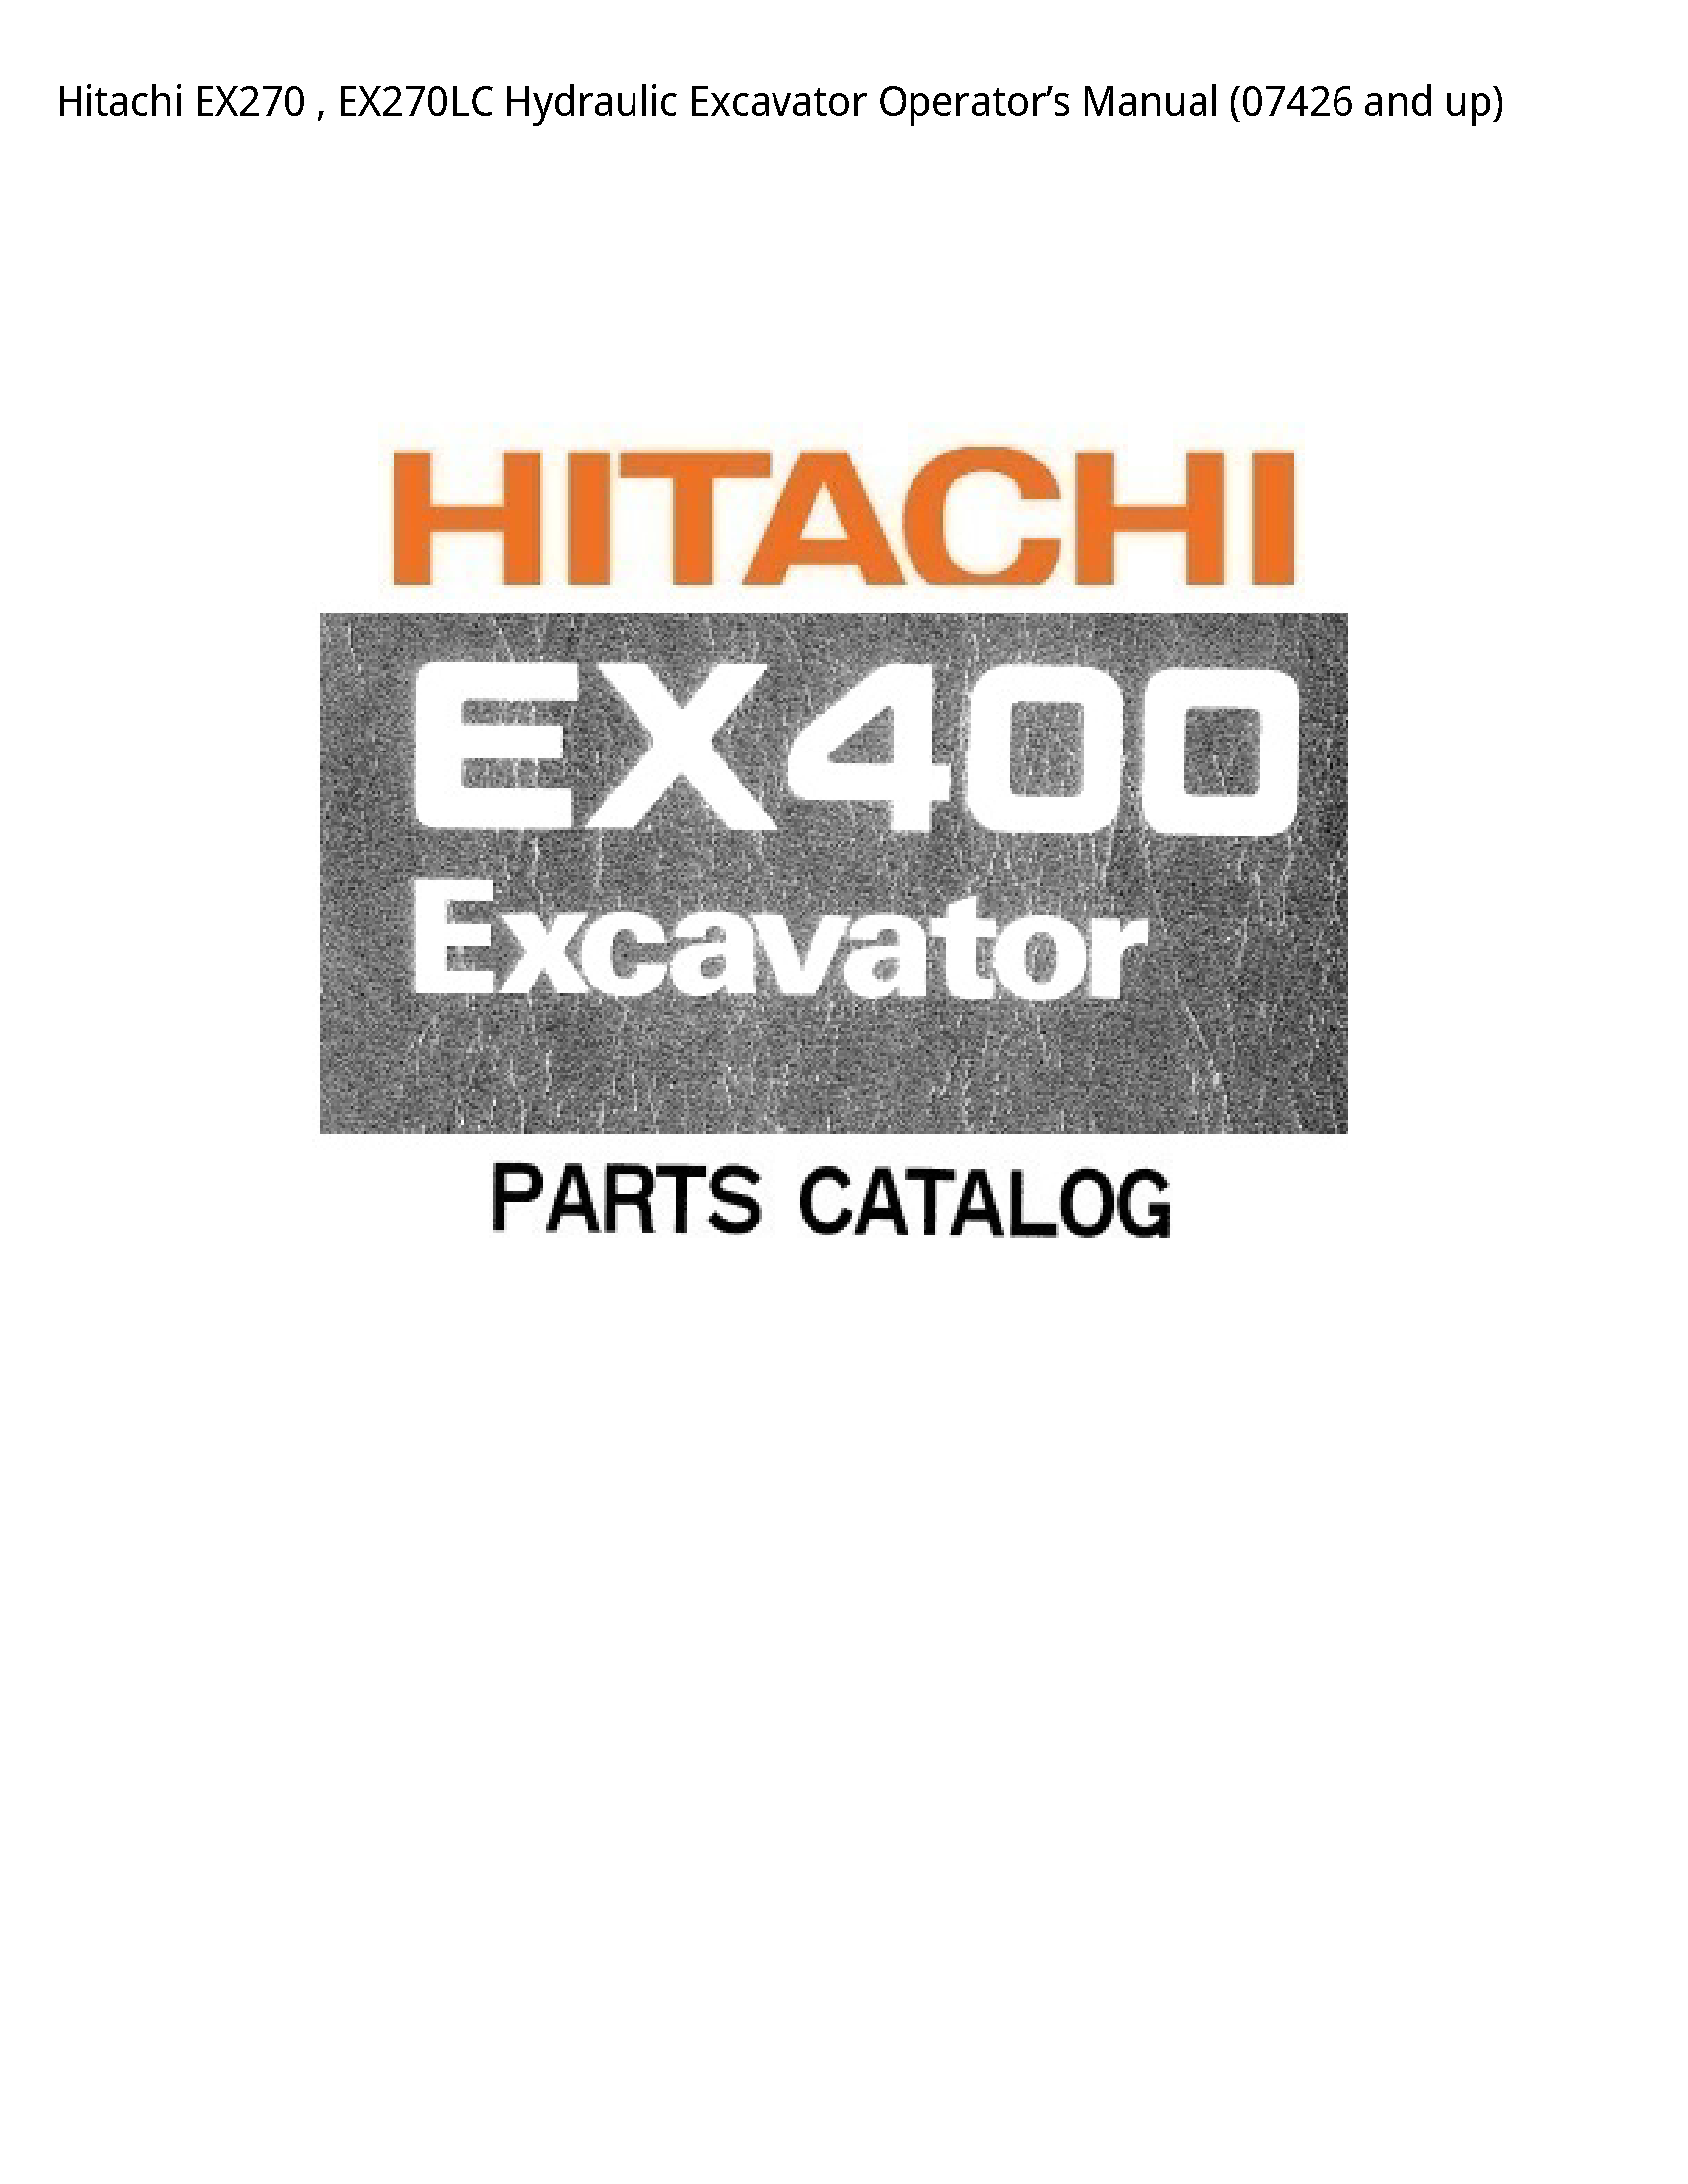 Hitachi EX270 Hydraulic Excavator Operator’s manual